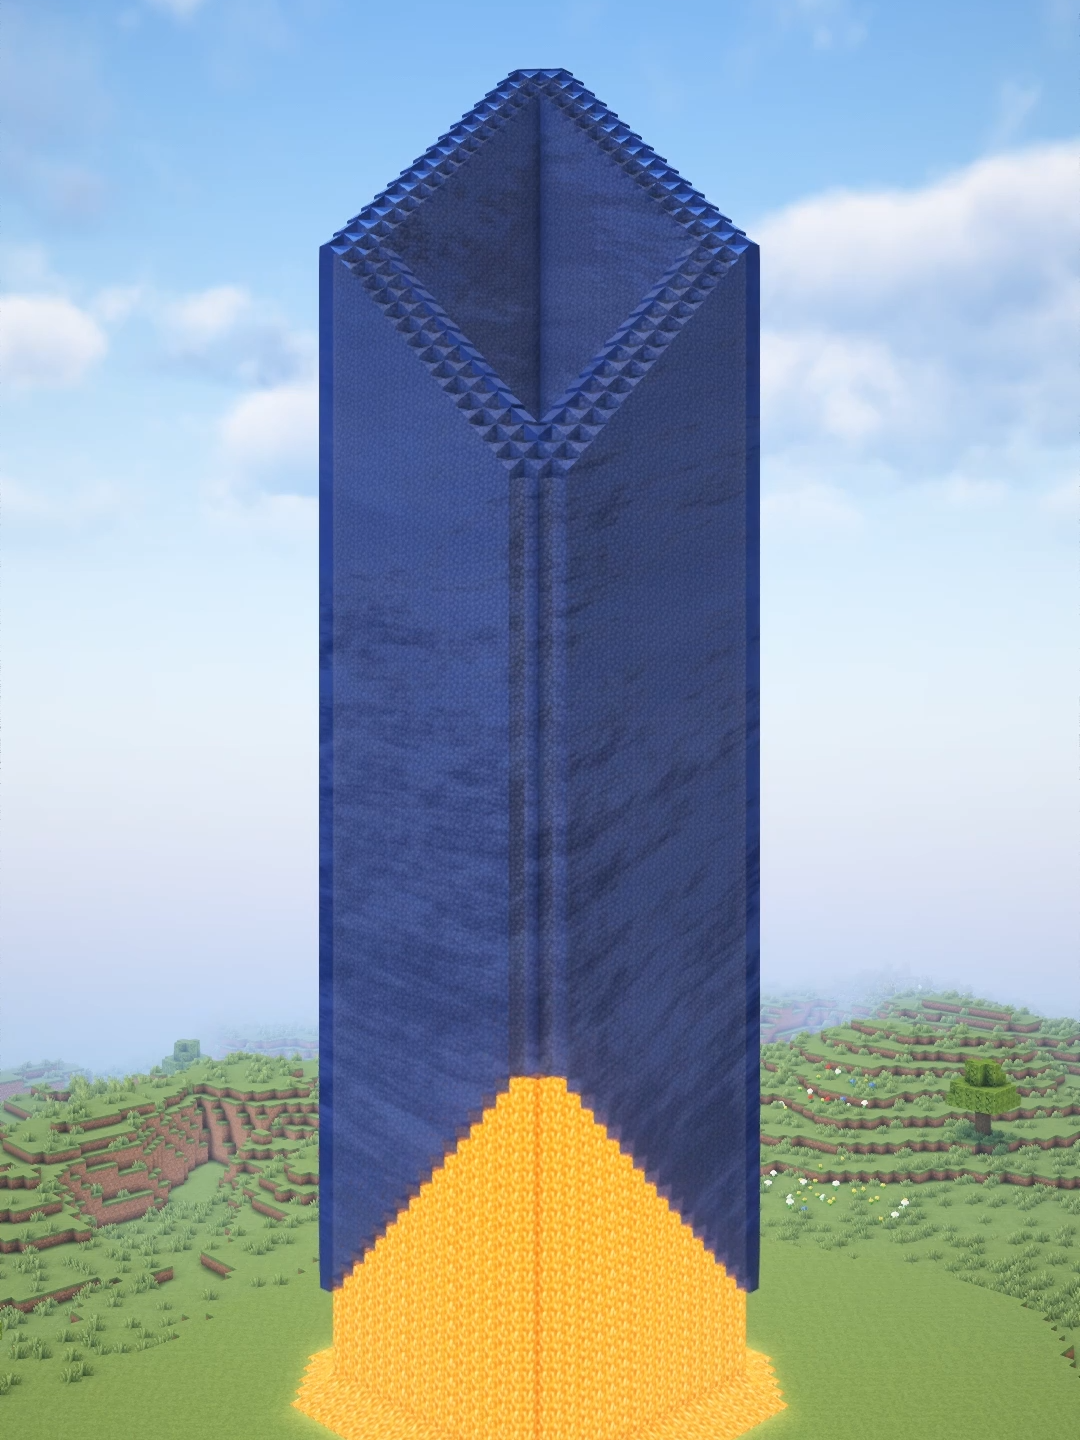 Minecraft Cobblestone Tower at Different Times -9%🤔 No Music  #Minecraft #minecraftbuilding #minecraftbuilds #minecrafttutorial